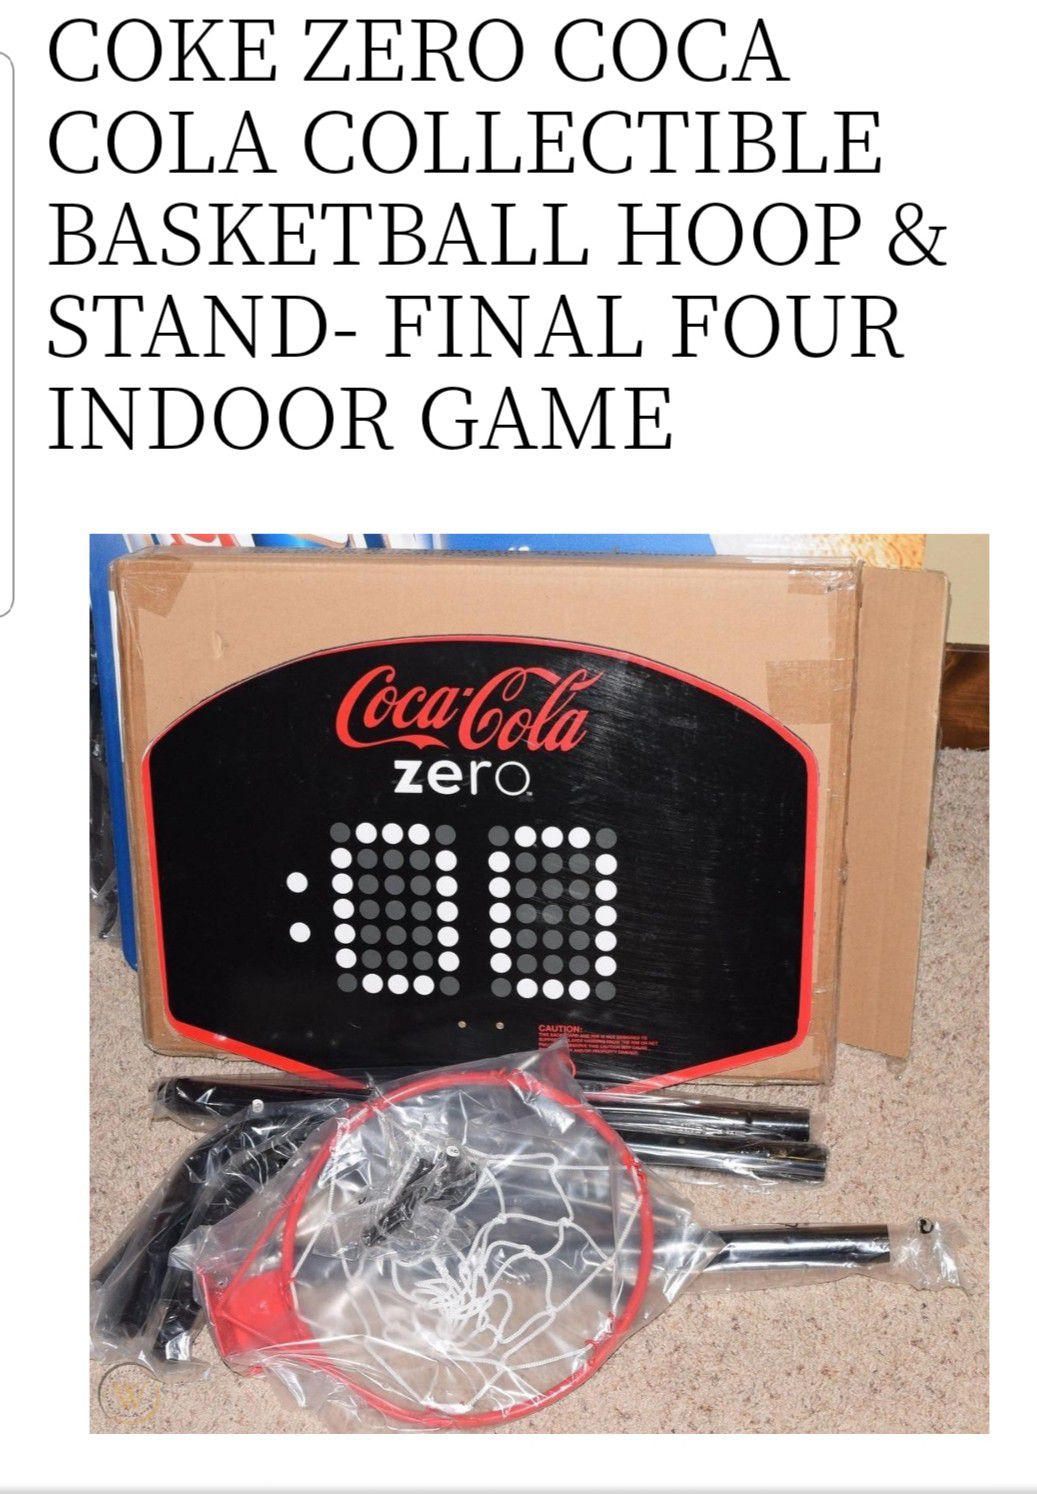 Coca cola zero basketball hoop